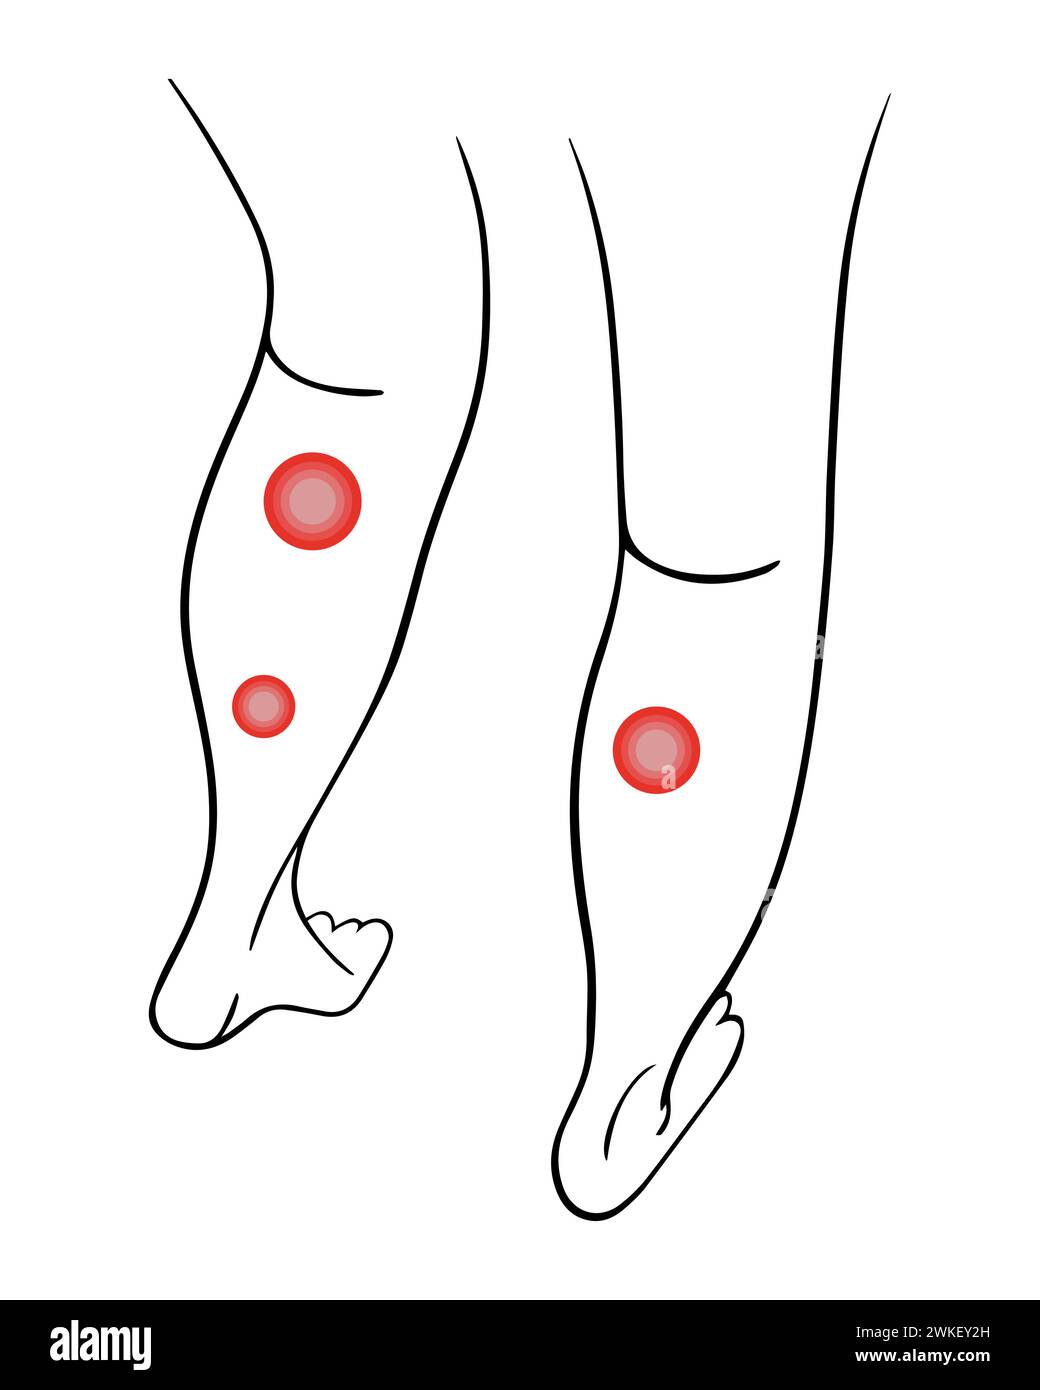 Varicose veins of the legs. Treatment of varicose veins. Stock Vector